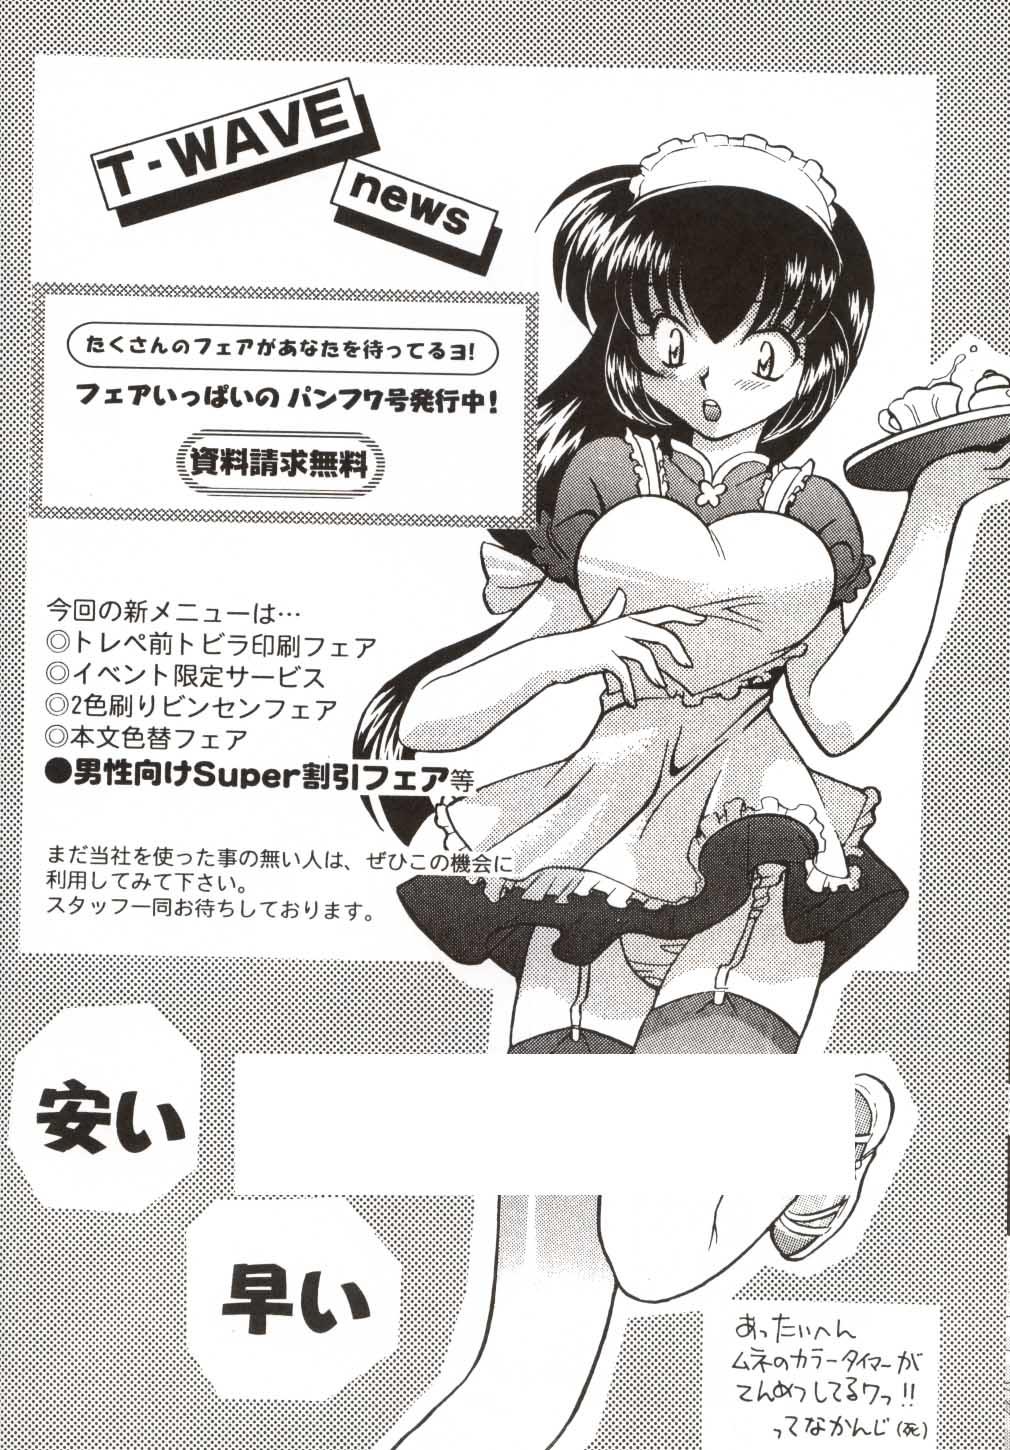 Twinks Bishoujo S San - Sailor moon Dominicana - Page 48